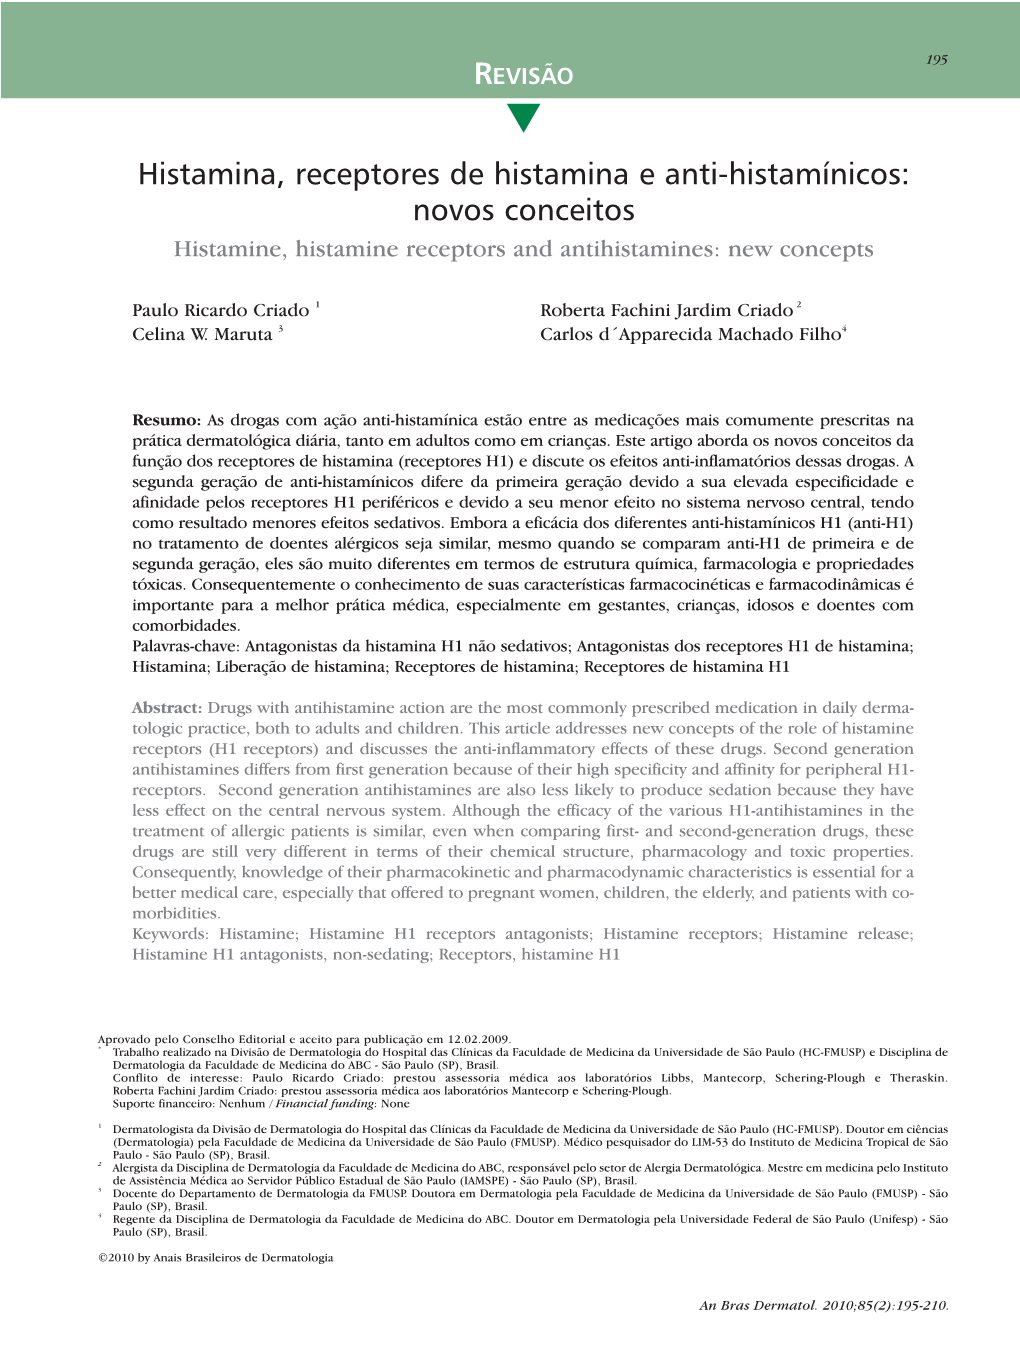 Histamine, Histamine Receptors and Antihistamines: New Concepts